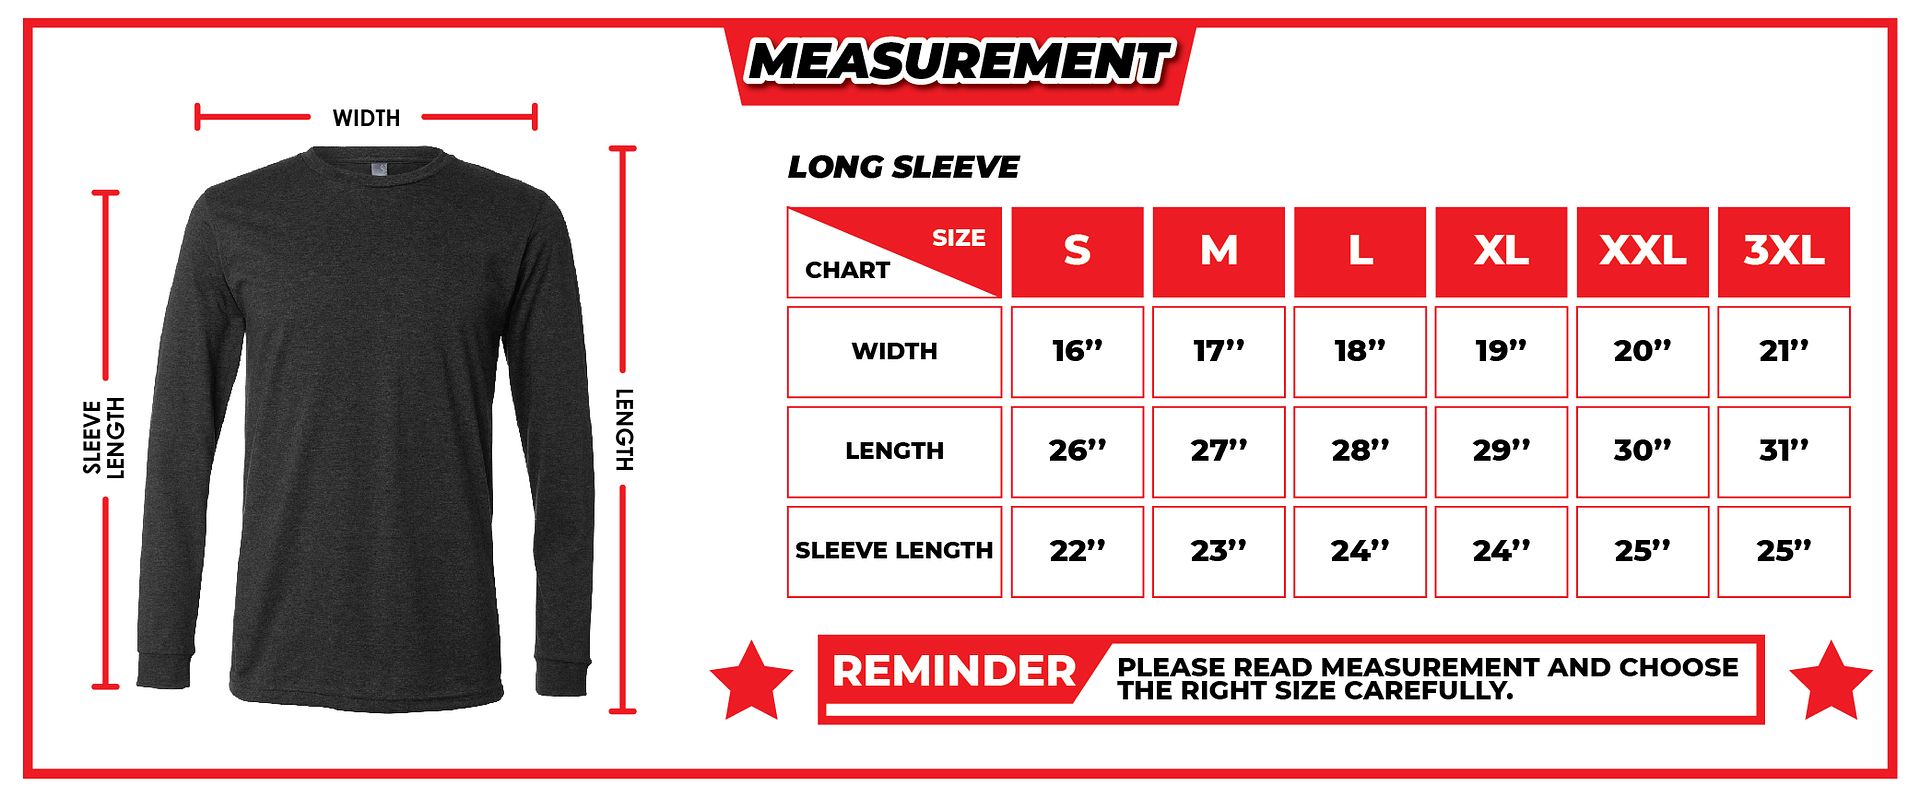 Measurement Baju Long Sleeve.jpg Photo by azavenue Photobucket